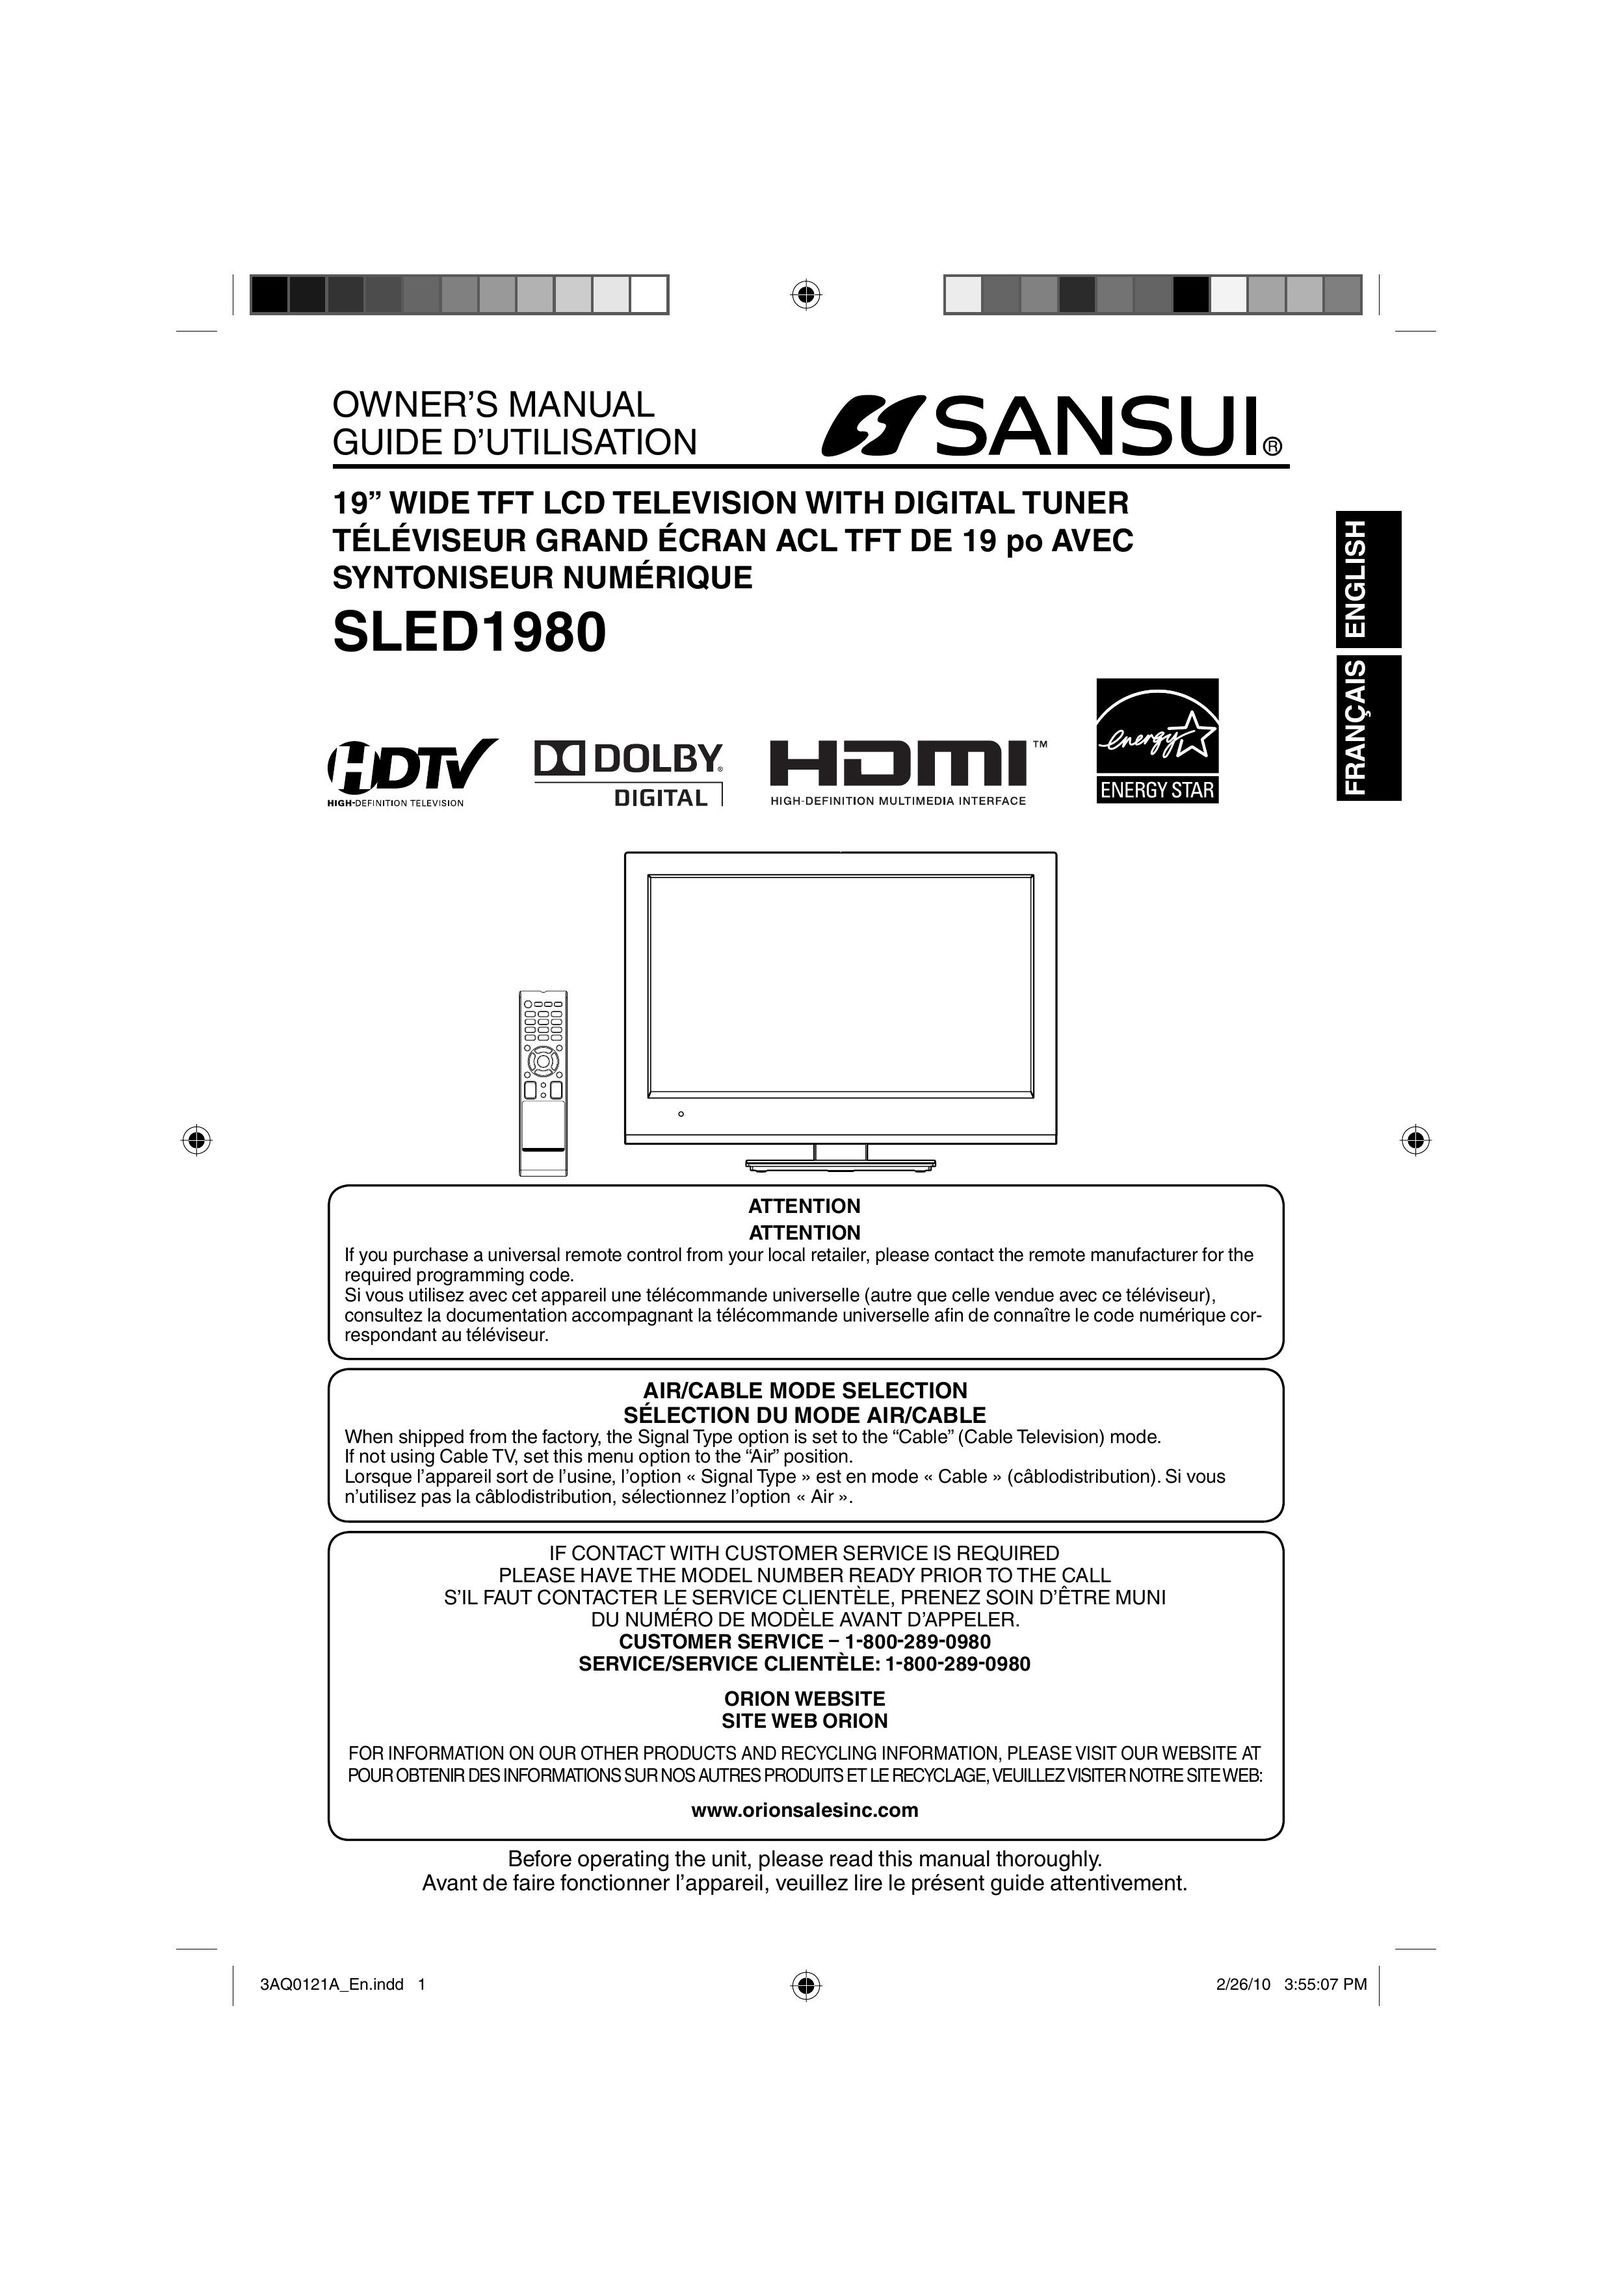 Sansui SLED1980 Flat Panel Television User Manual